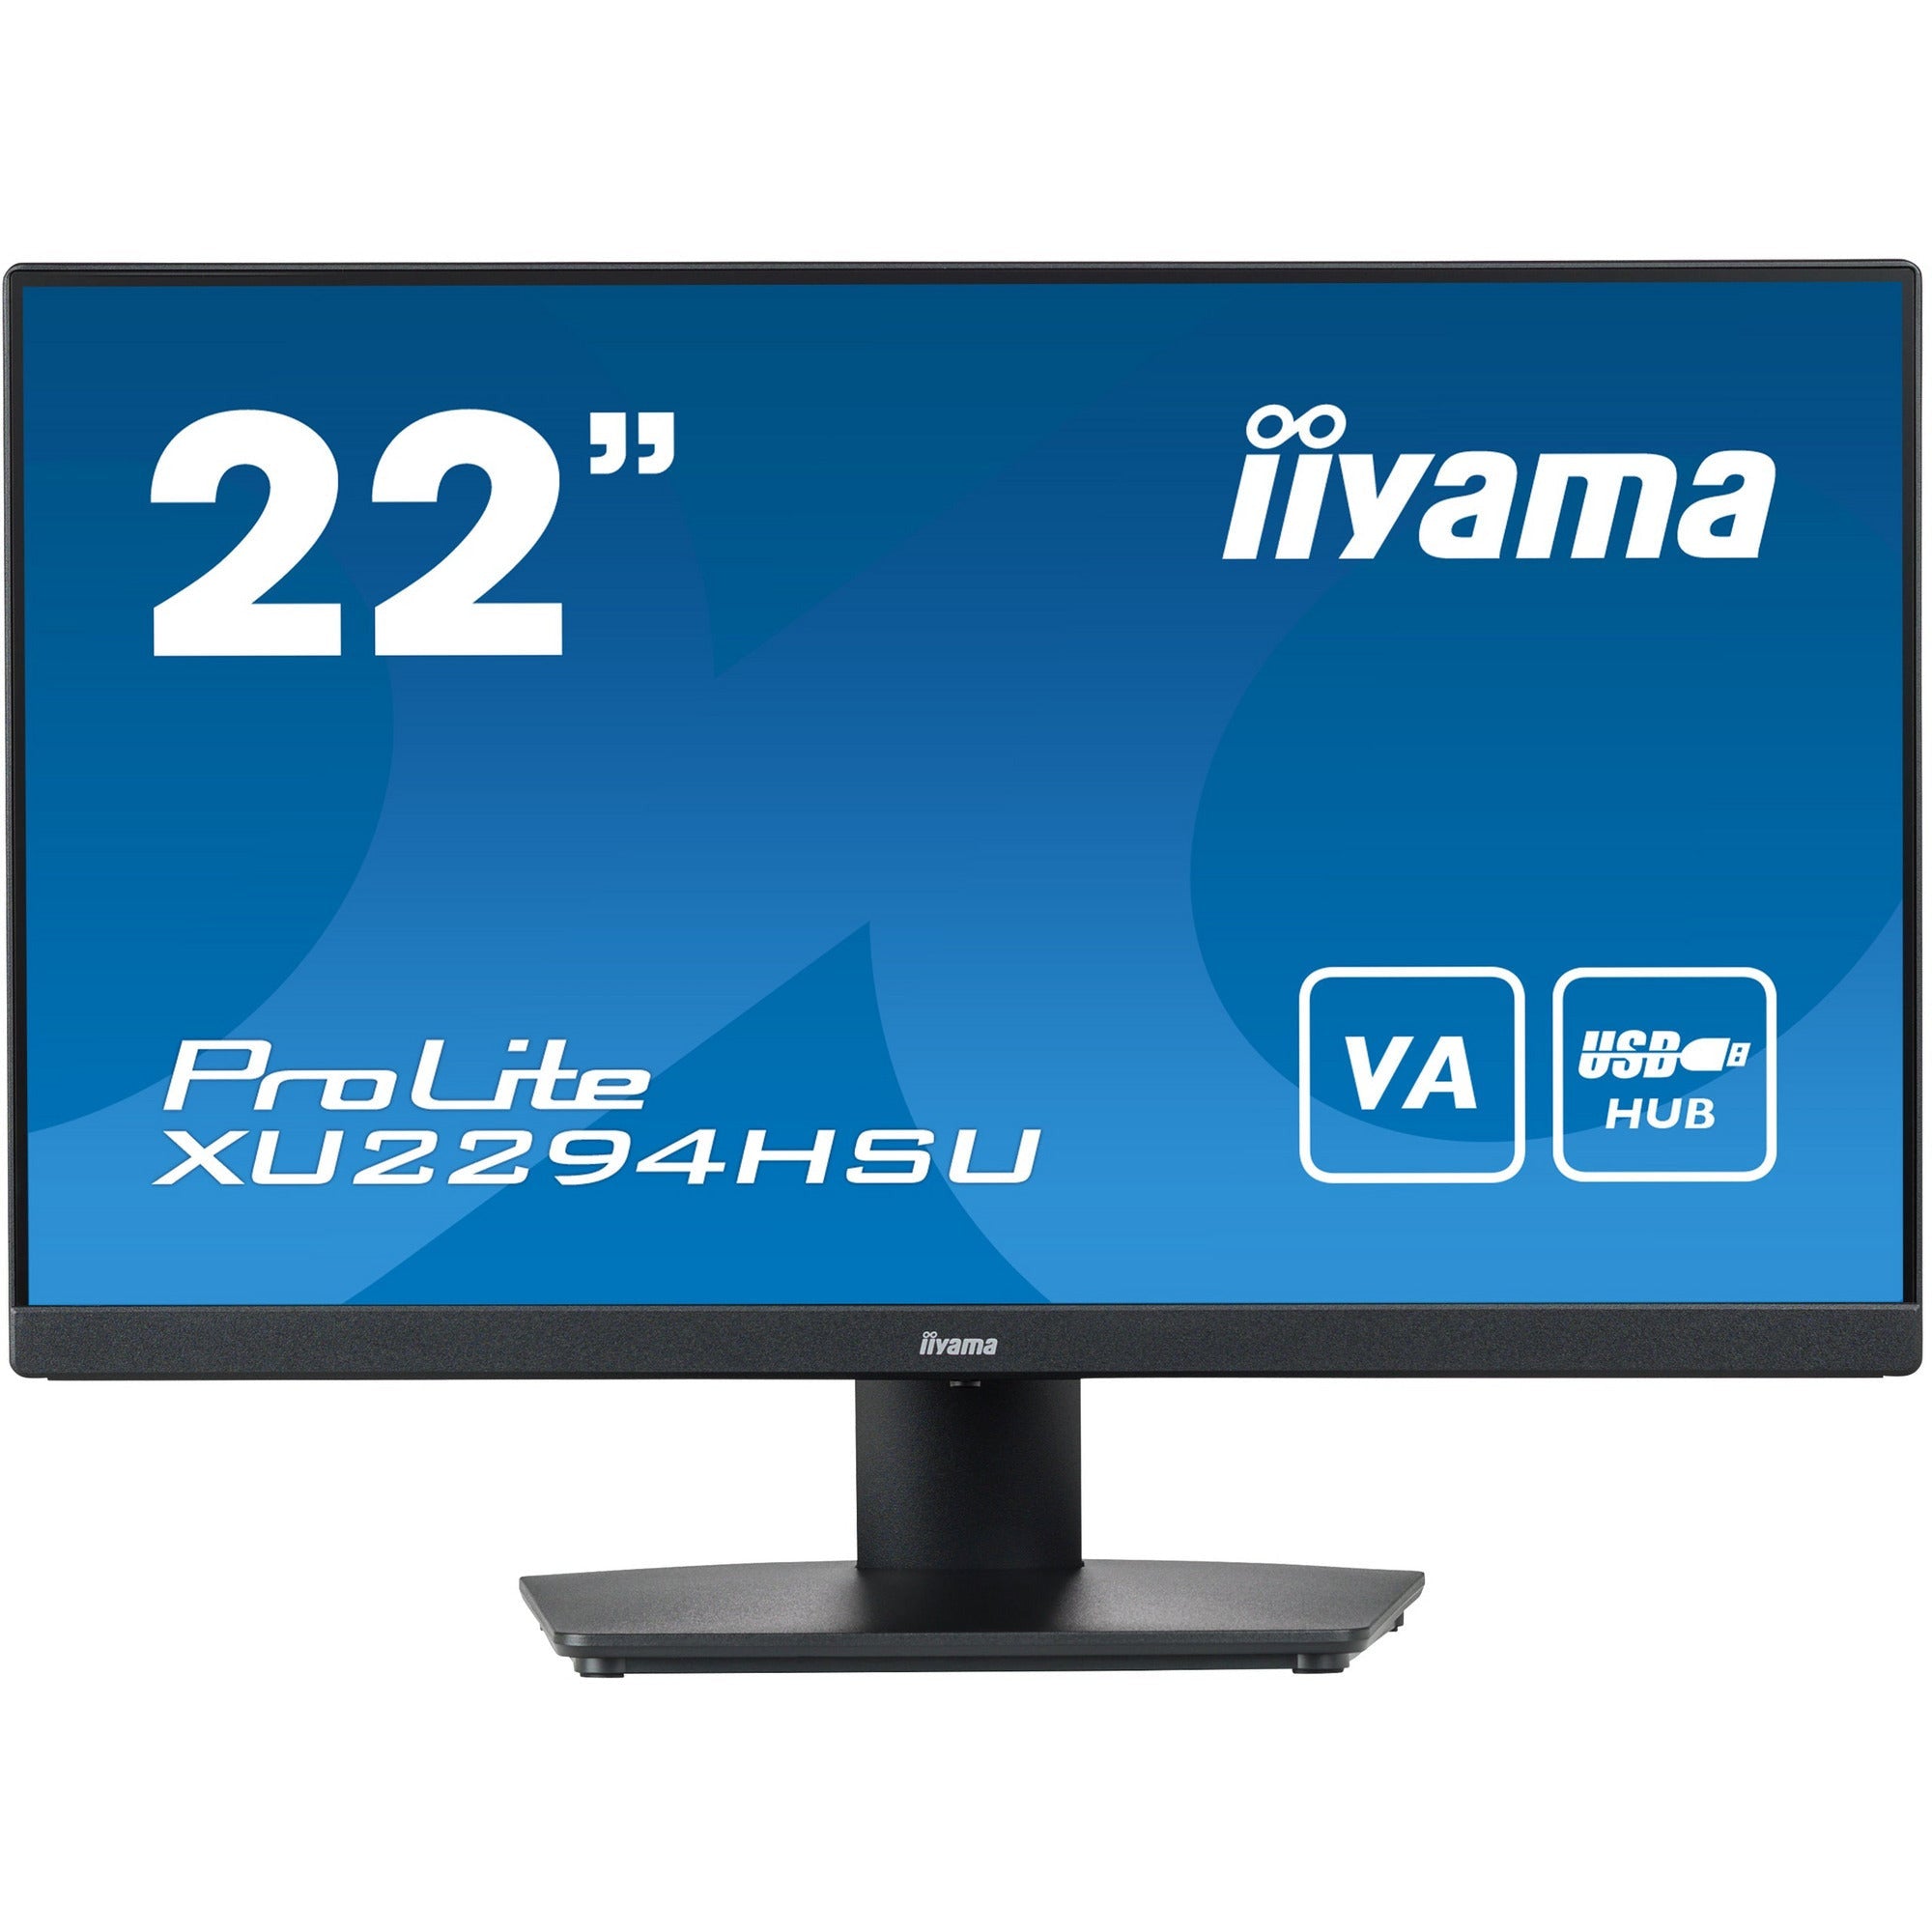 iiyama ProLite XU2294HSU-B2 22" LCD HD Monitor